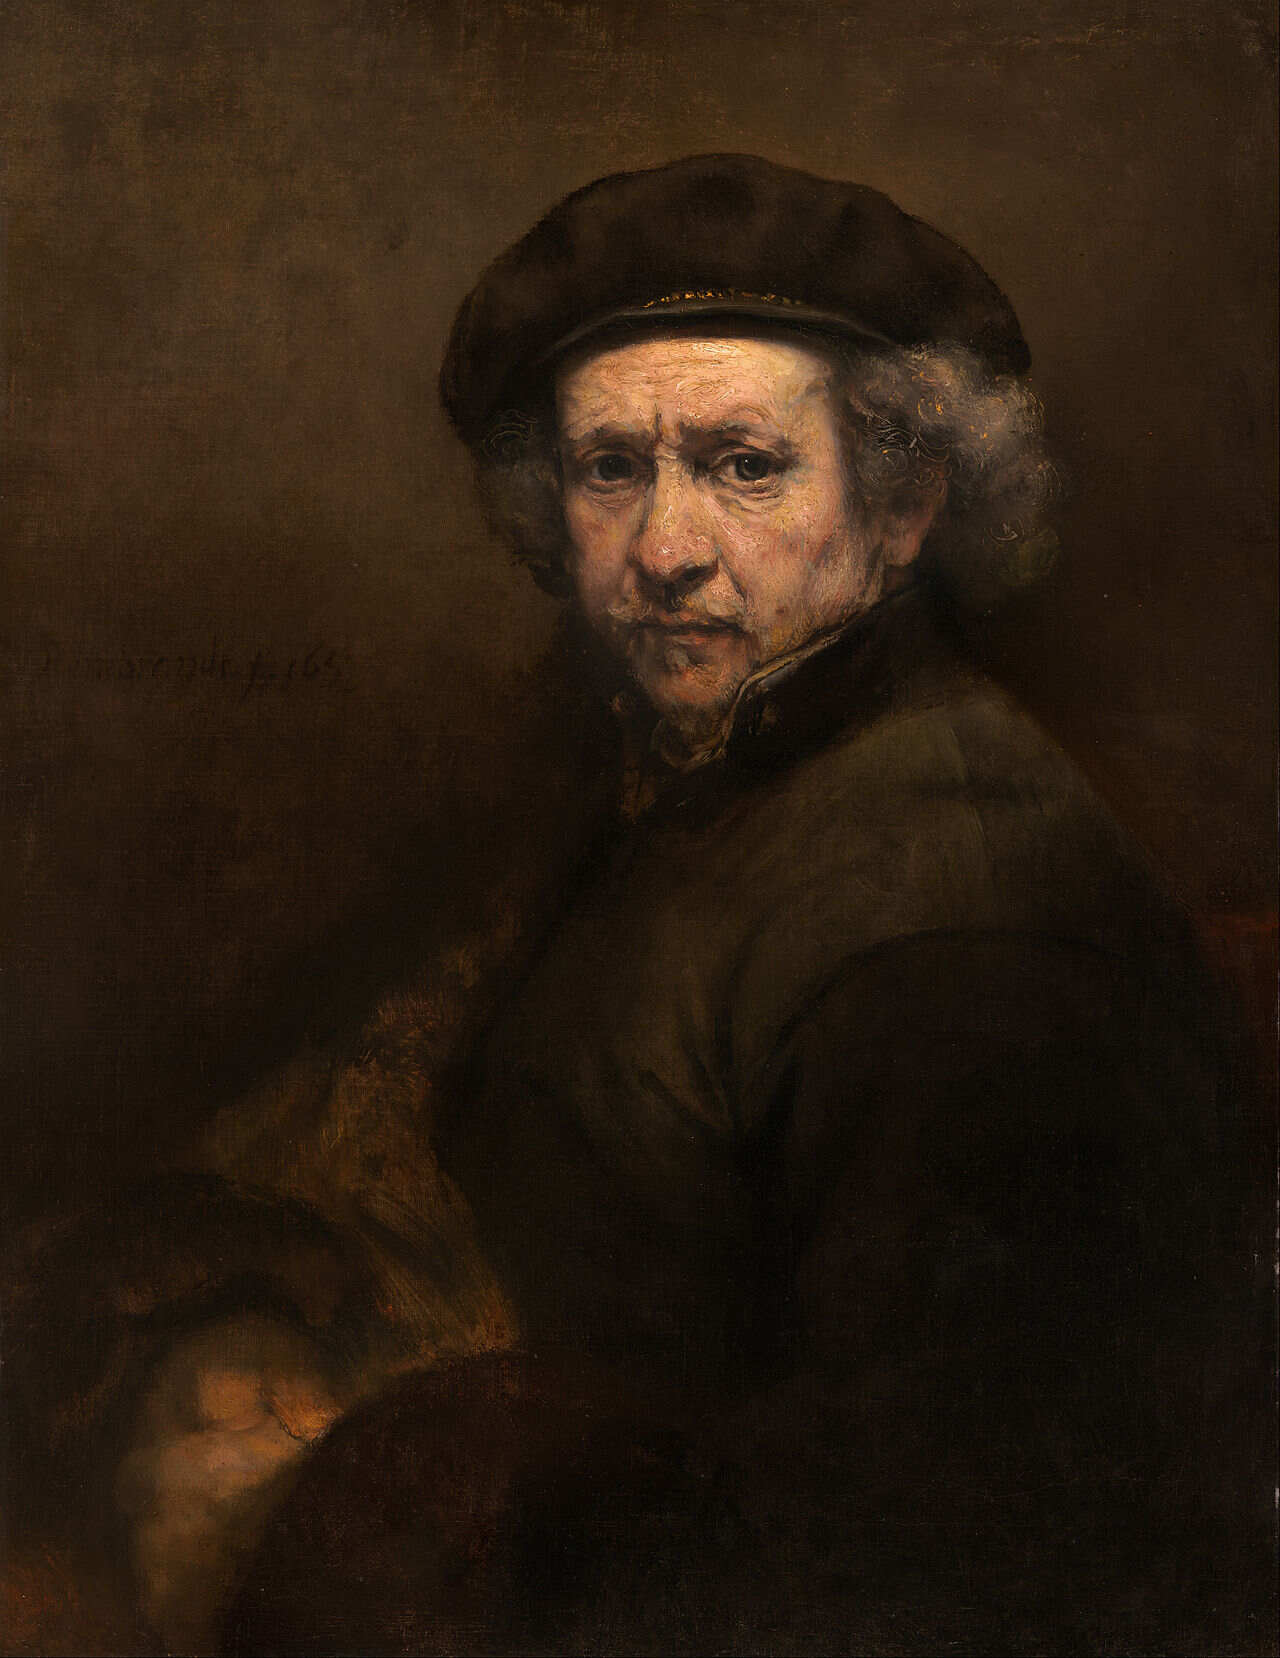 1280px-Rembrandt_van_Rijn_-_Self-Portrait_-_Google_Art_Project.jpg